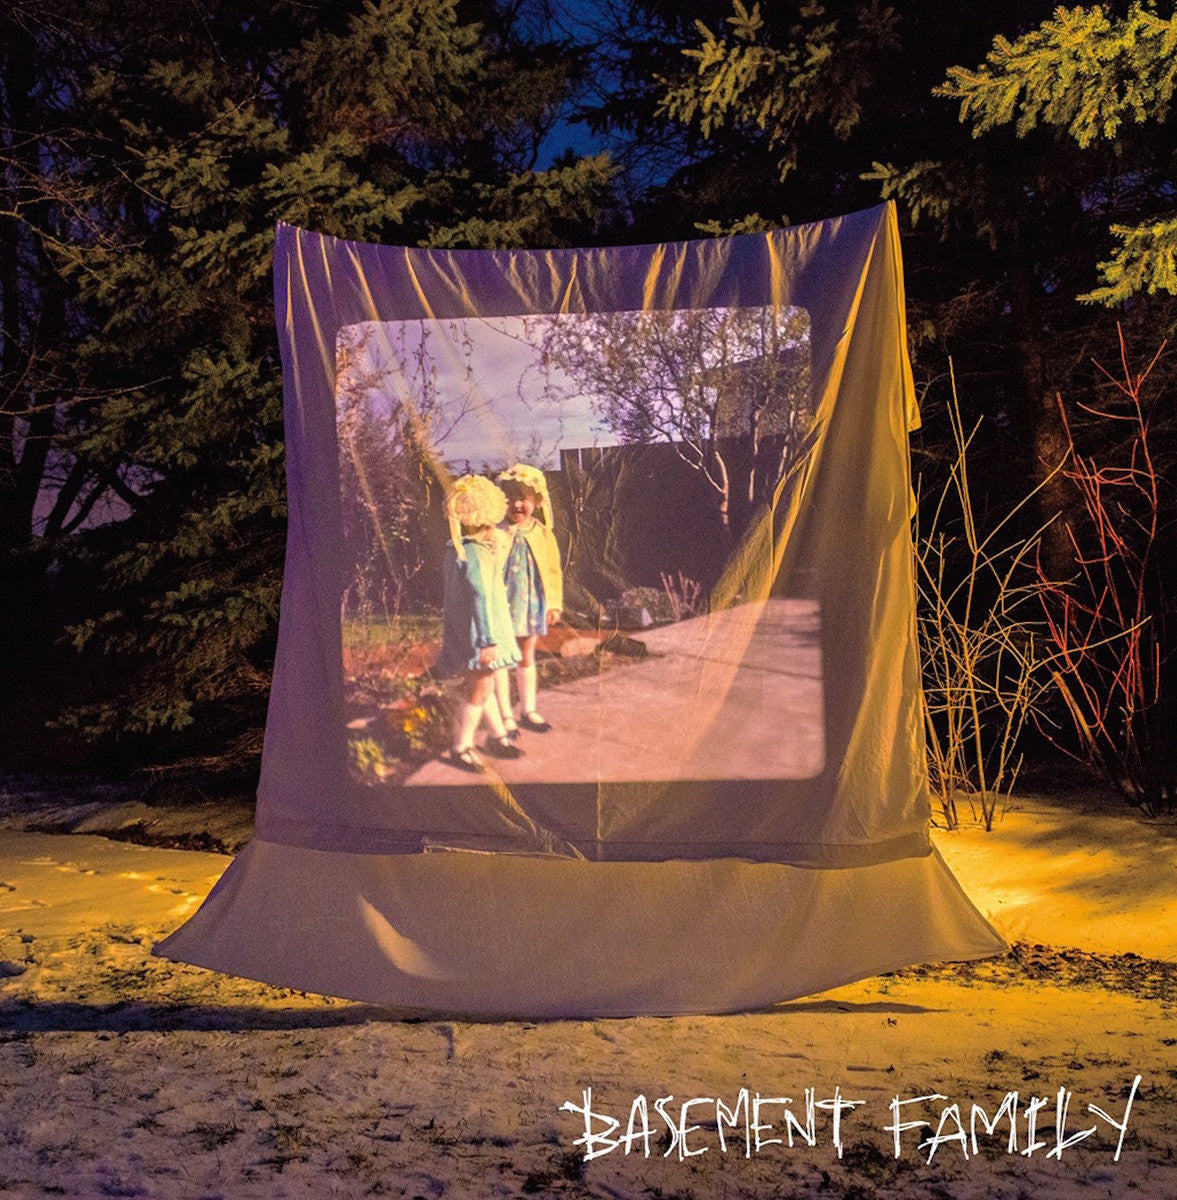 Basement Family - S/T debut - New Vinyl Record 2016 Maximum Pelt Records Limited Edition of 300 on Color Vinyl - Chicago IL Sludgey Garage-Pop / Stoned-out Dream Pop / FUZZZZZ (fu: Chicago/Max Pelt)